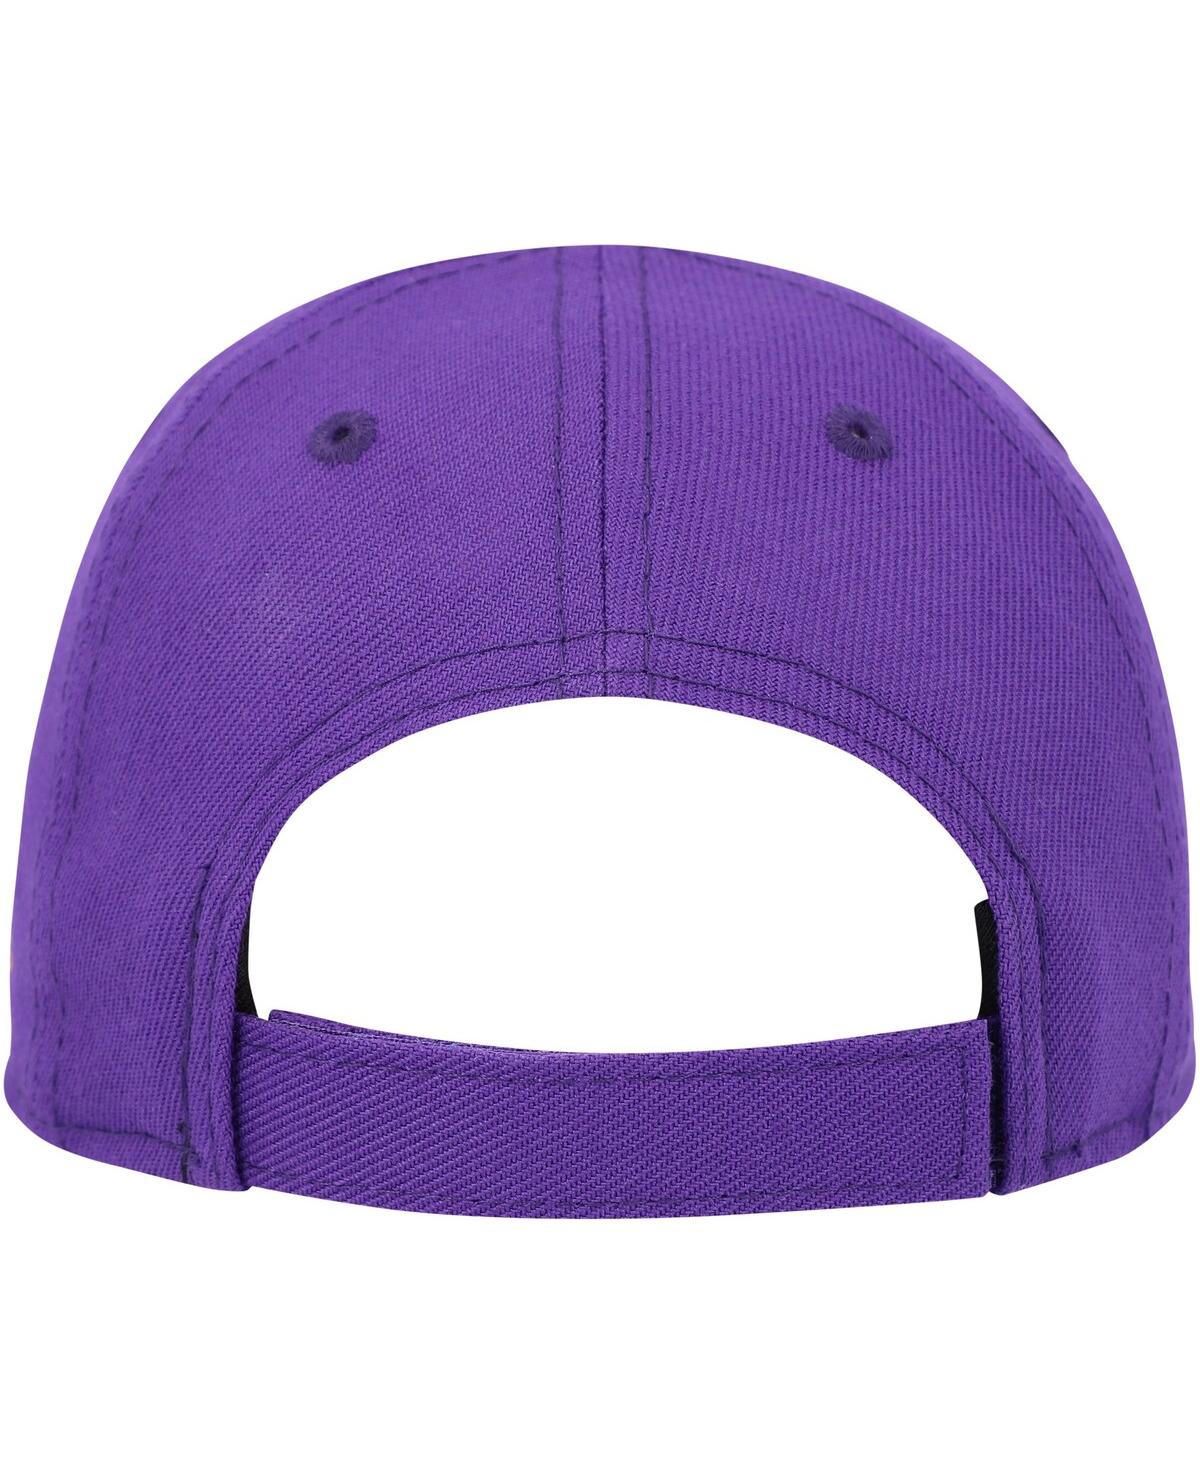 Shop New Era Infant Boys And Girls  Purple Minnesota Vikings My 1st 9fifty Snapback Hat